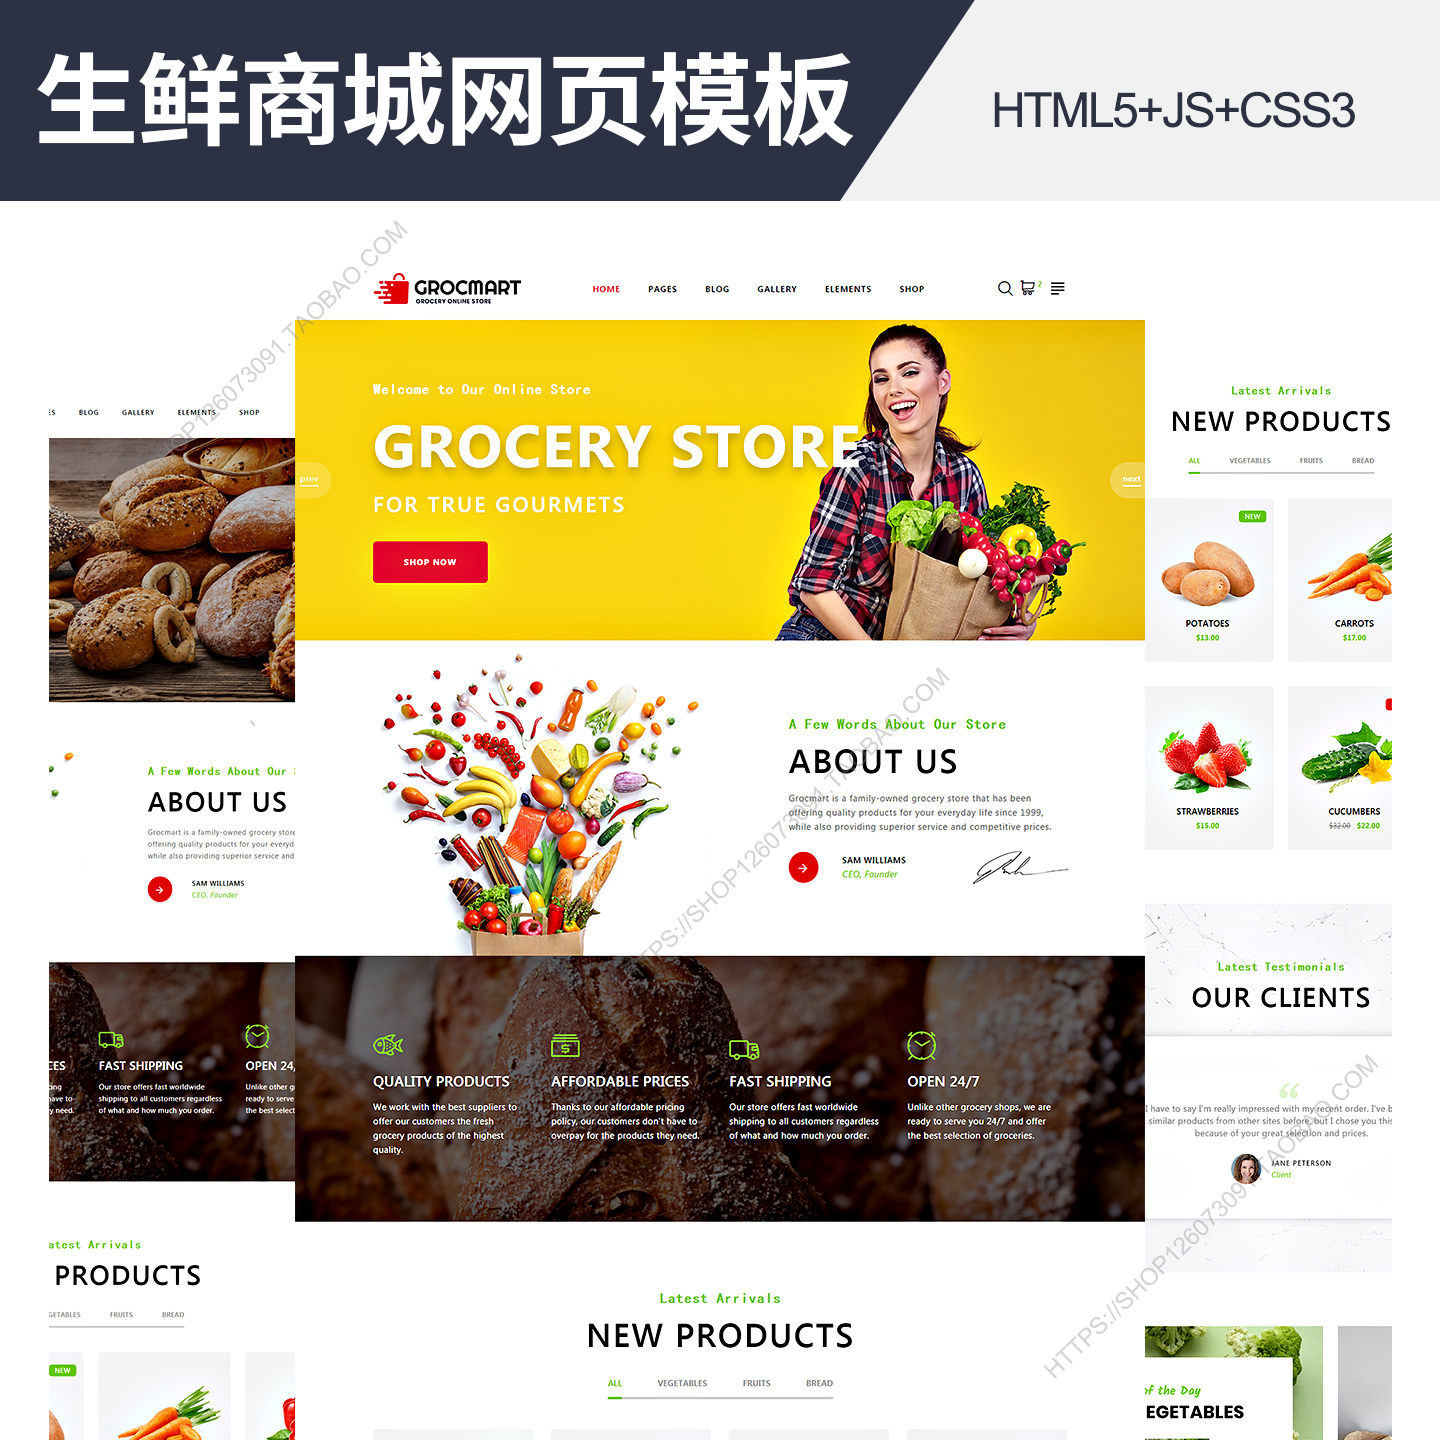 bootstrap动态网页设计响应式web模板 美食生鲜商城html5网站建设